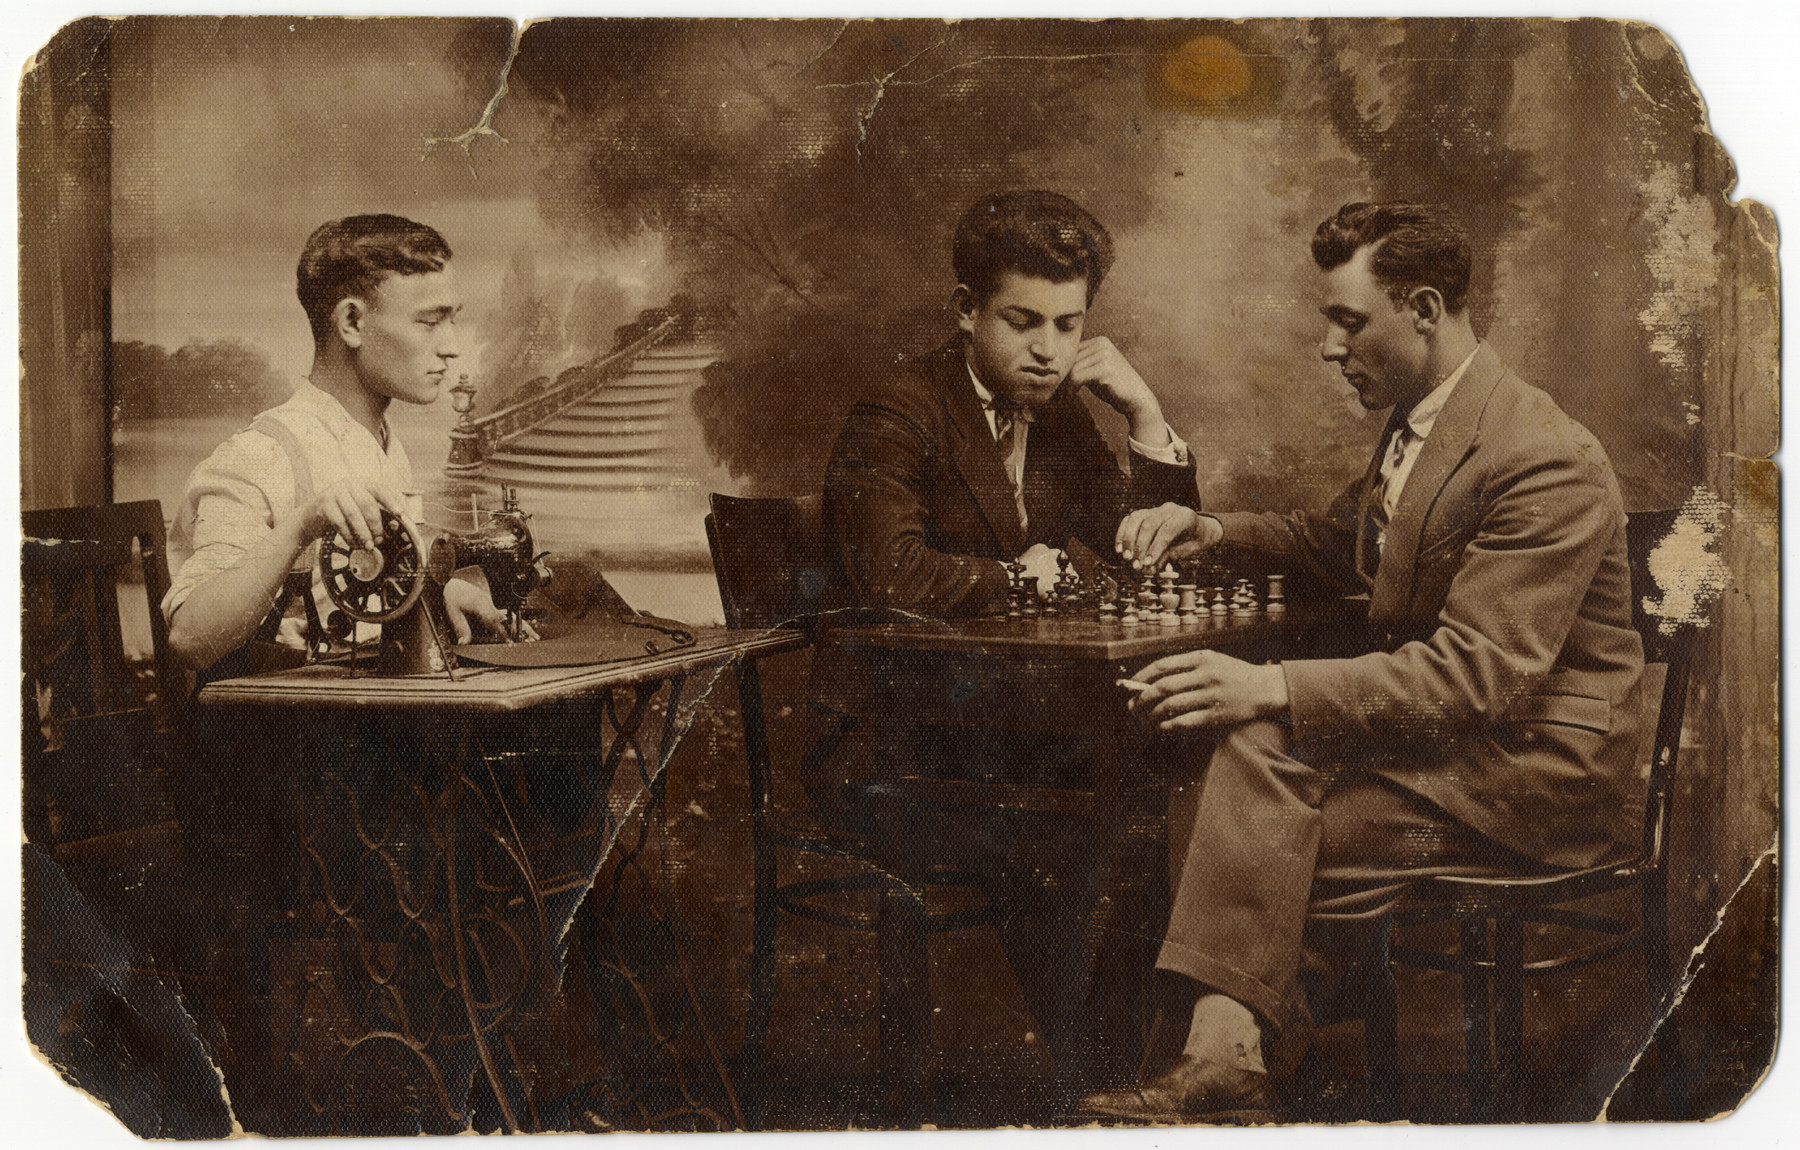 Original Caption: "Three friends: Mendel Grynberg (left), Fishel Feldman, donors' uncle and Chaim Wierzba posing playing chess in Sokolow podlaski, c. 1936."